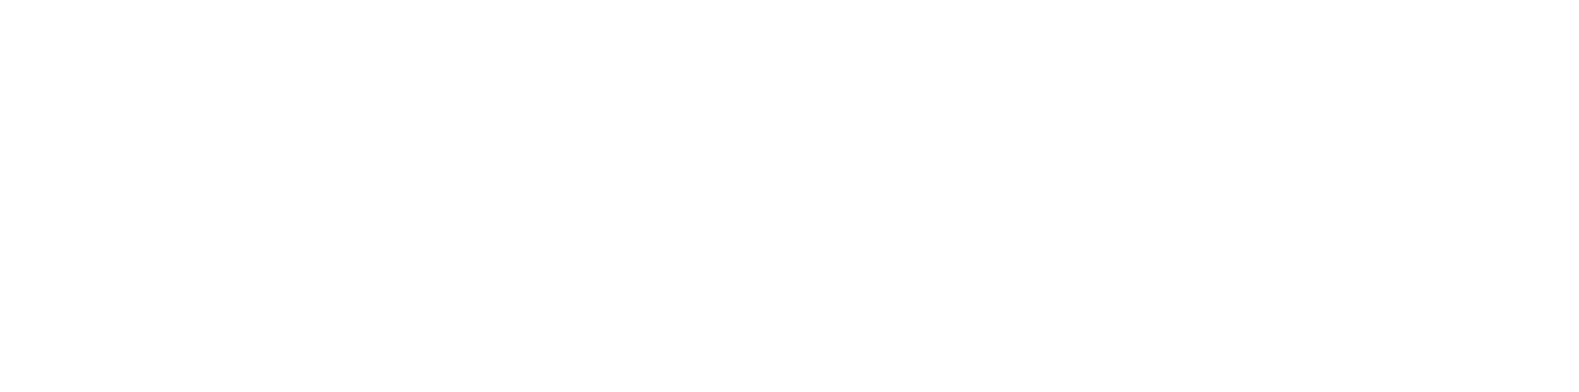 Healthcare Services Group logo large for dark backgrounds (transparent PNG)